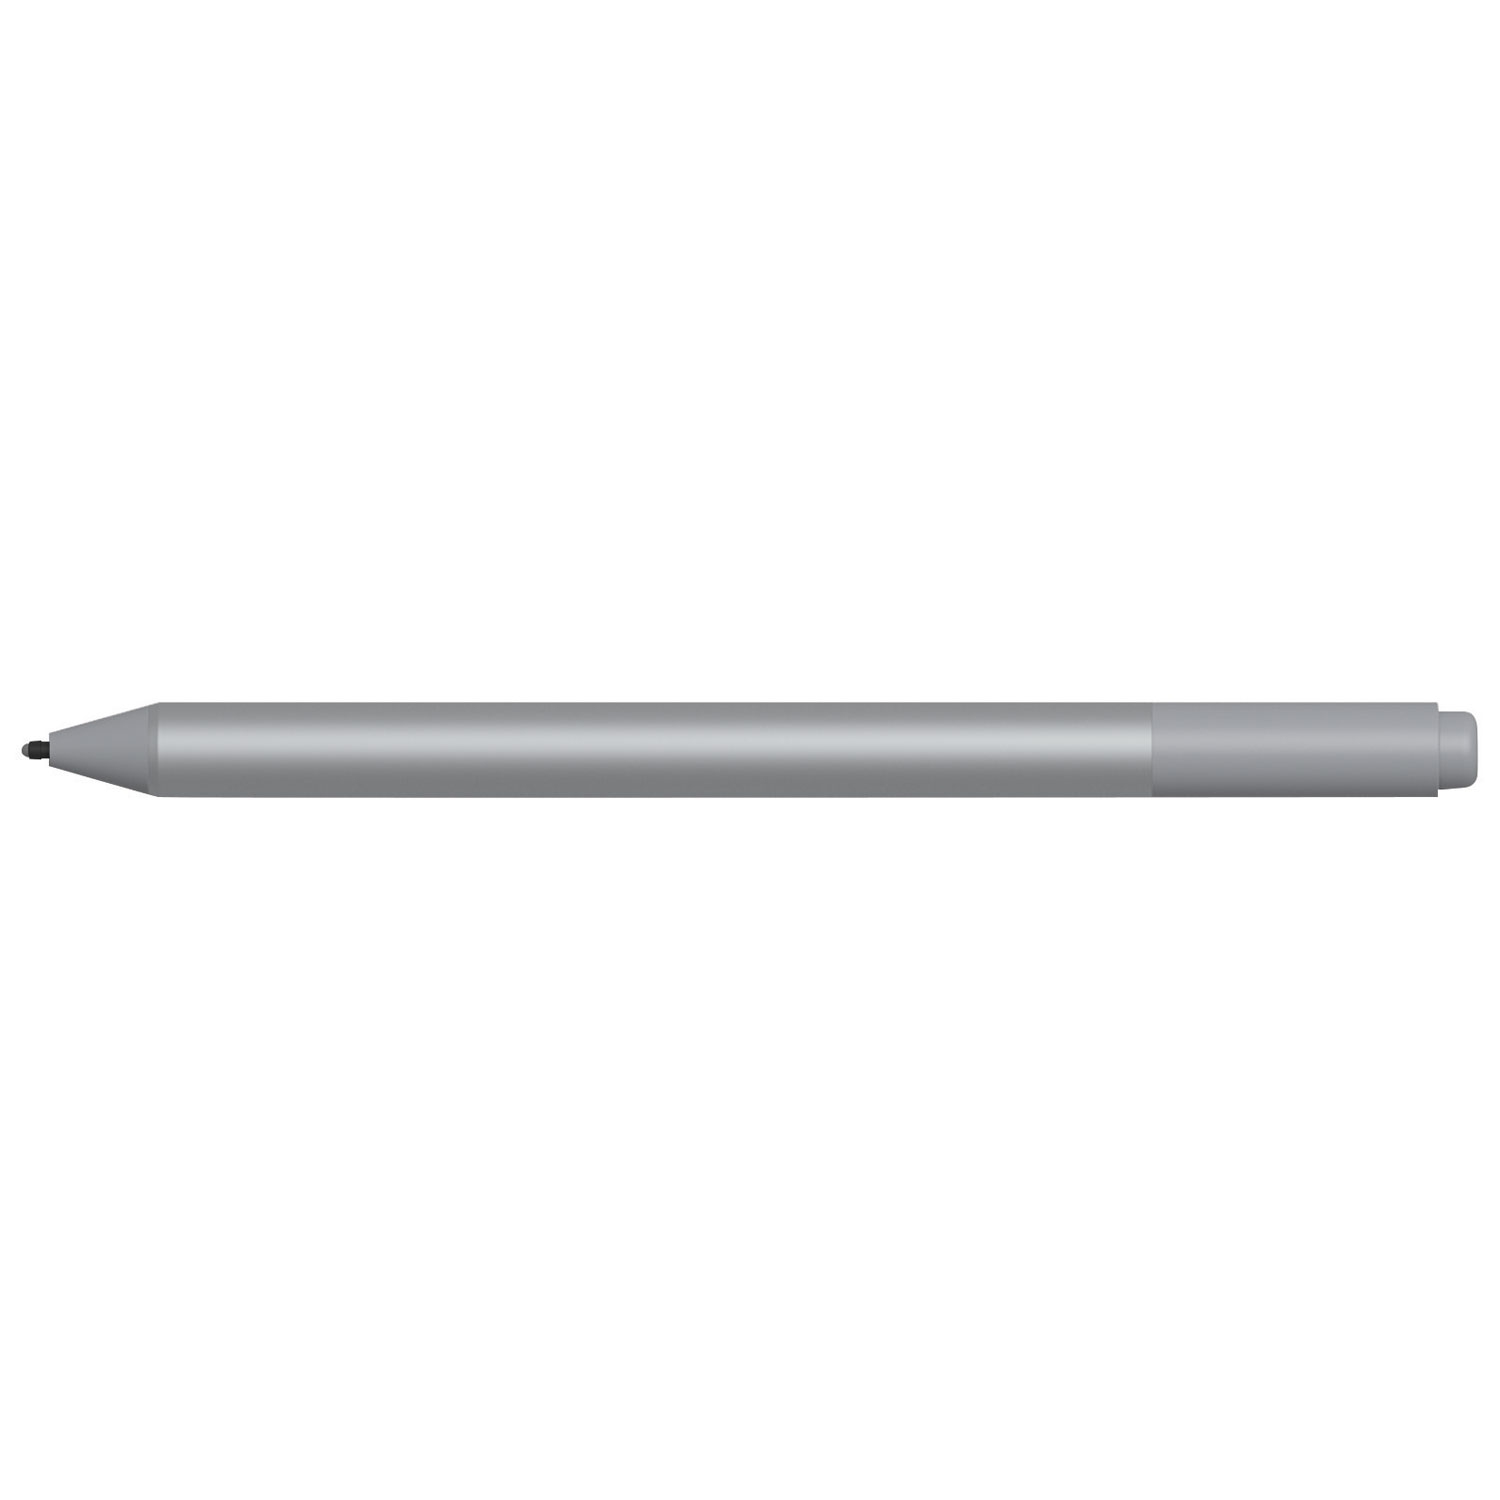 Microsoft Surface Pen - Silver | Best Buy Canada